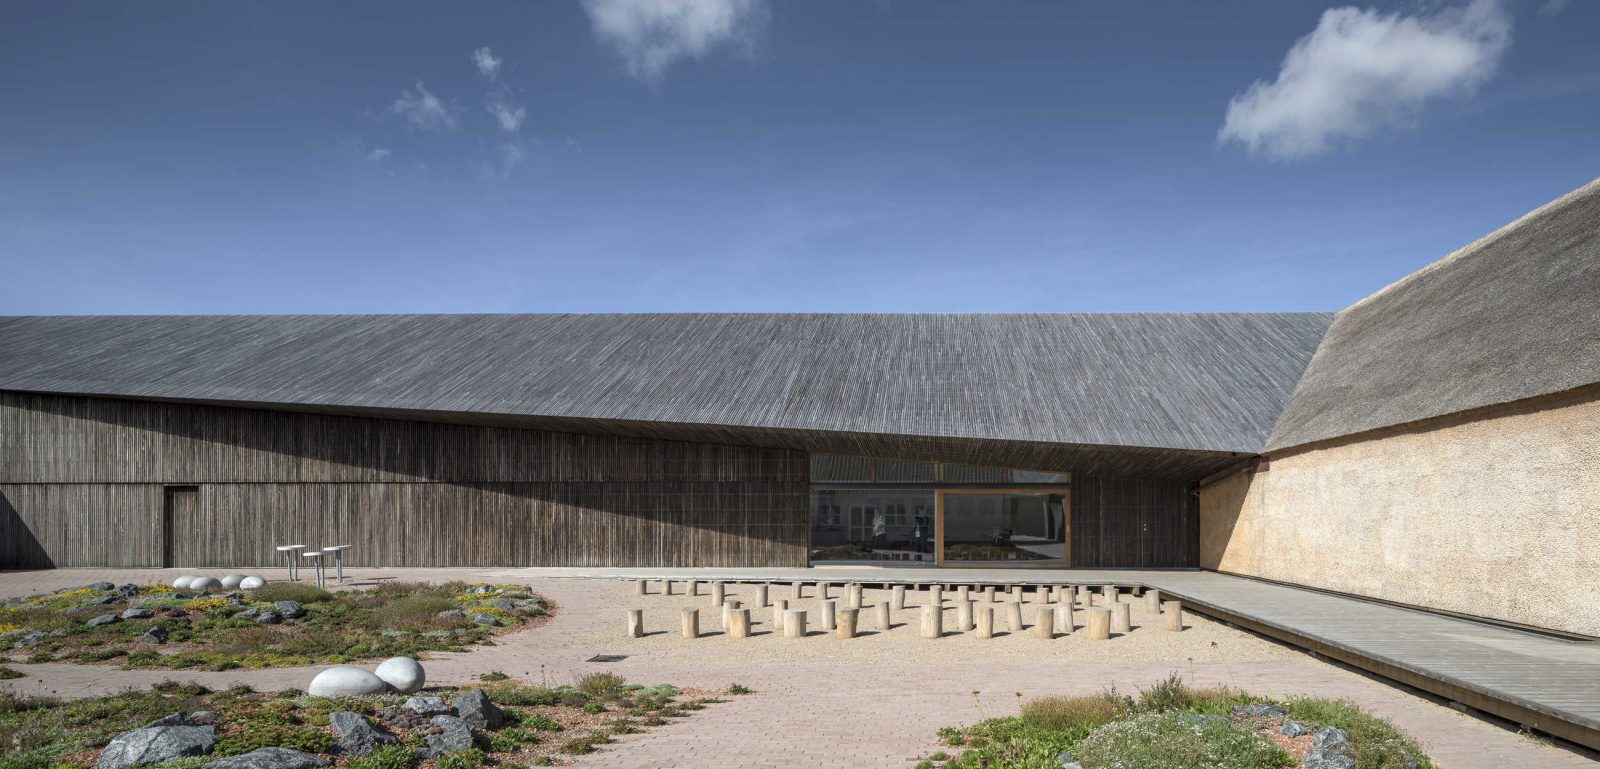 Archisearch Wadden Sea Centre by Dorte Mandrup interpretes local farmhouse typology